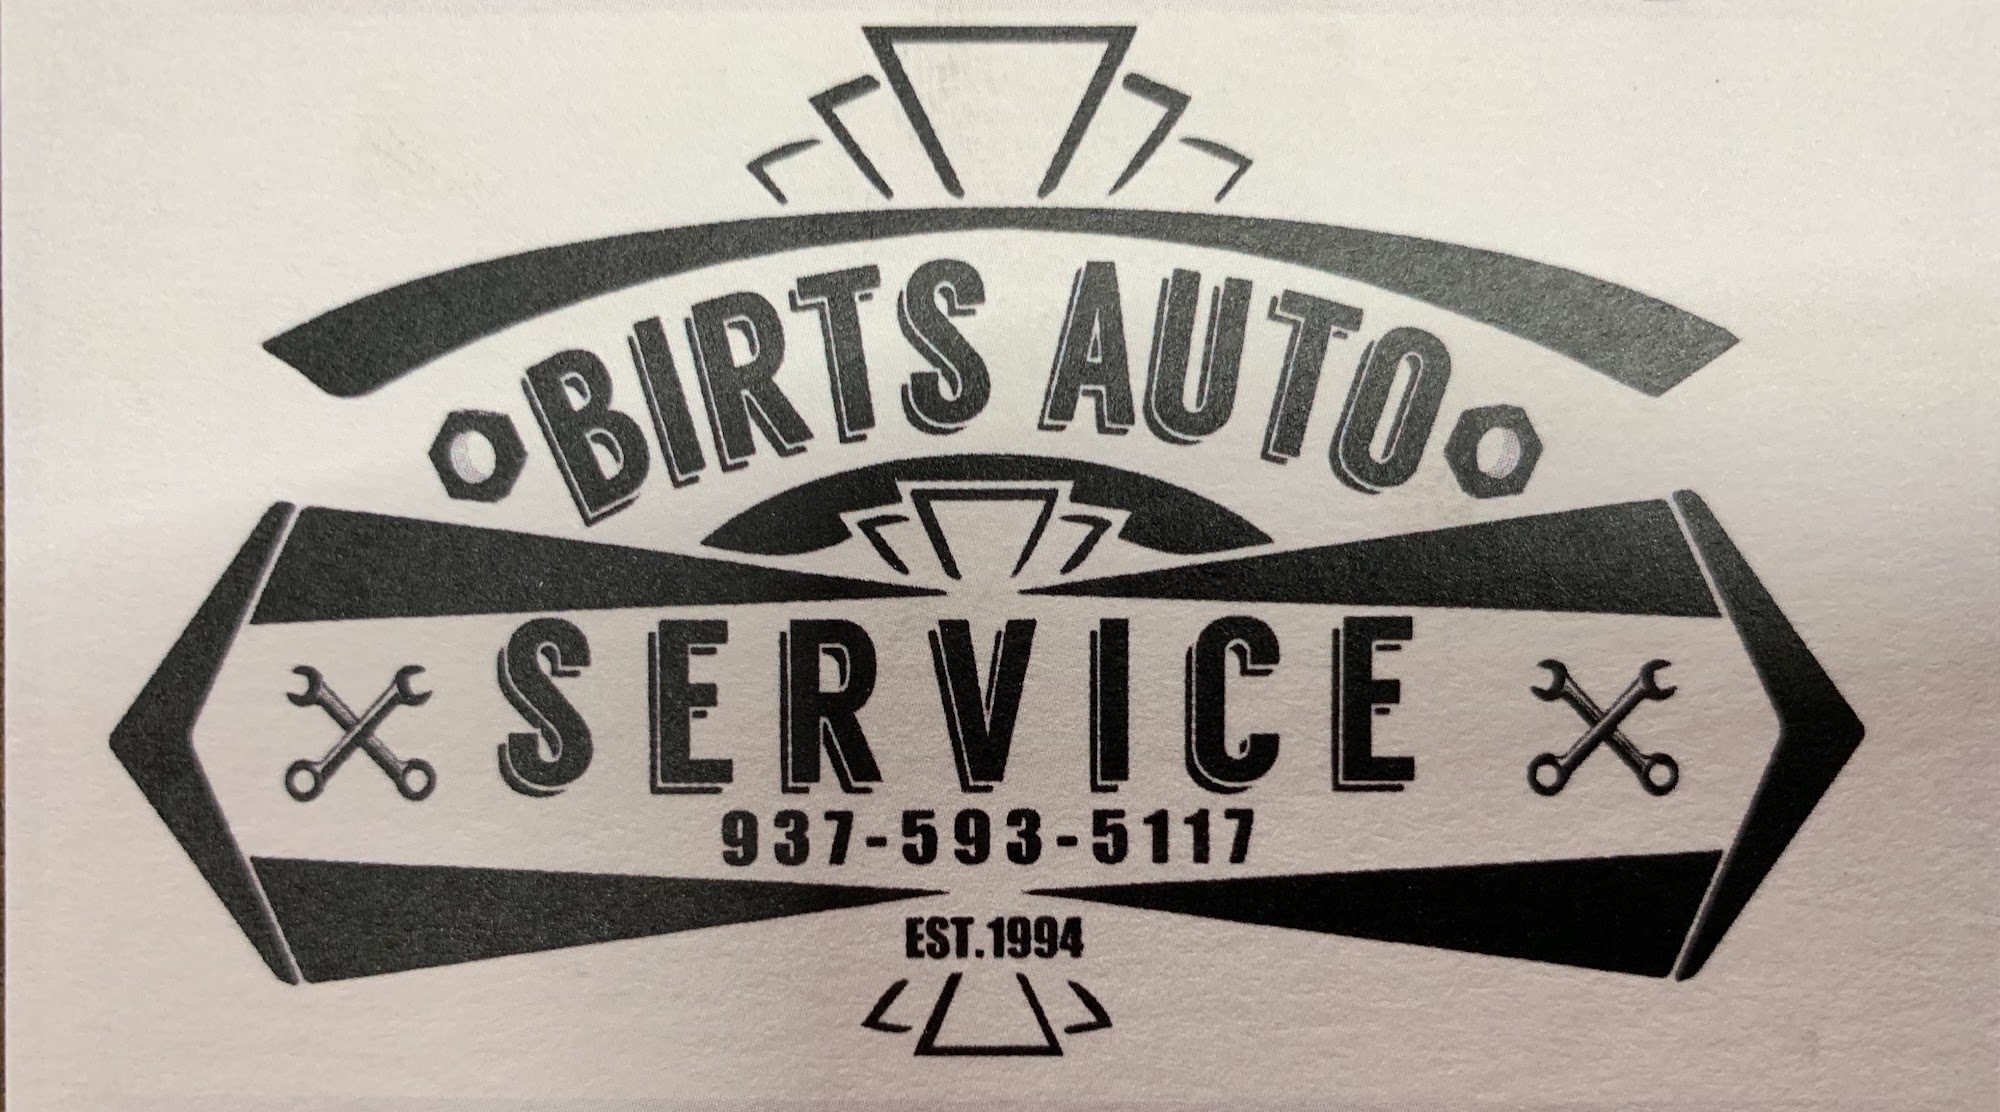 Birts Auto Service